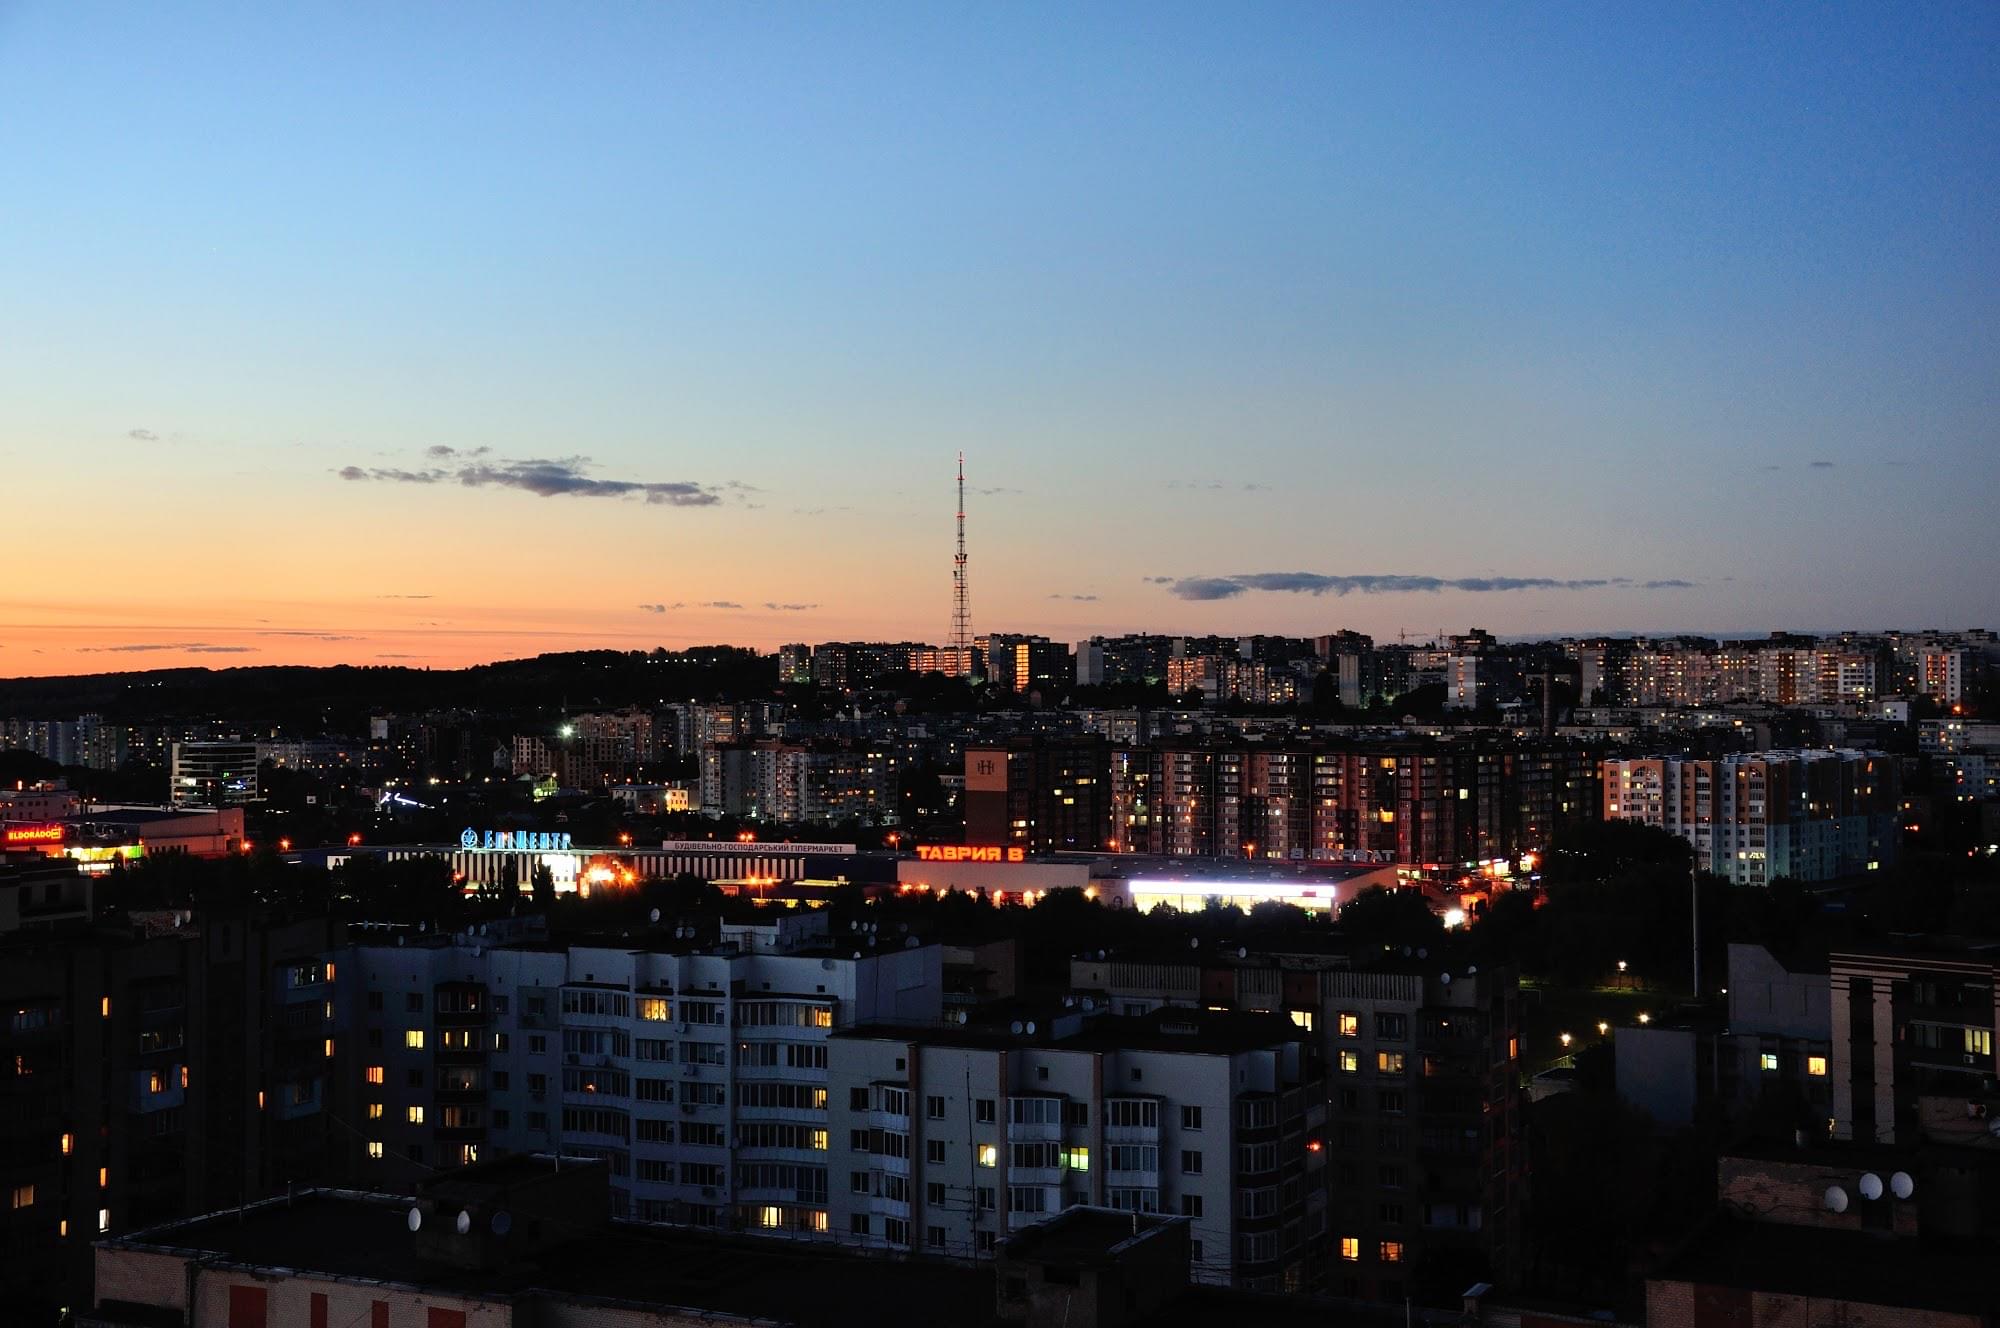 Grand Palace - панорама на город Хмельницкий ночью